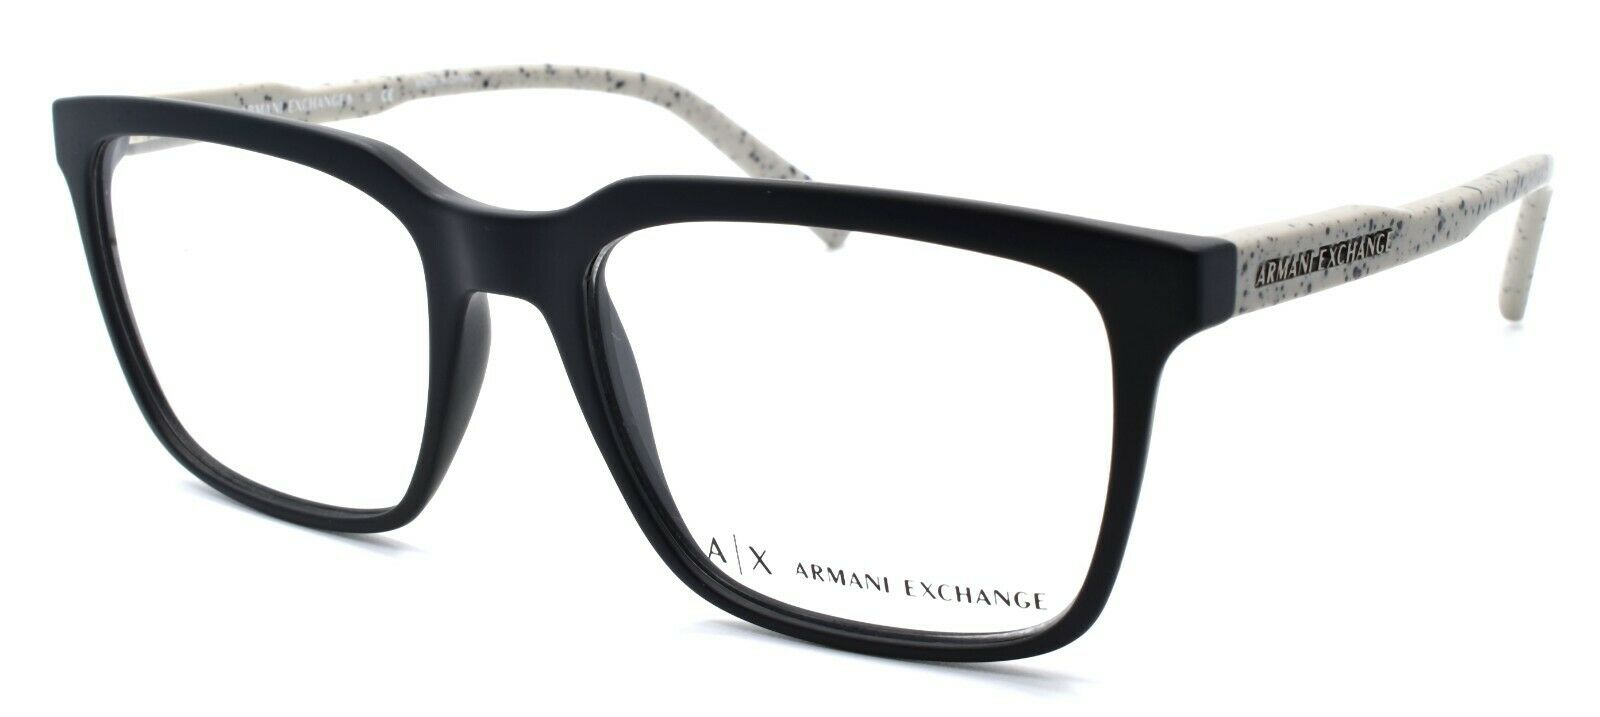 1-Armani Exchange AX3045 8078 Men's Eyeglasses Frames 55-18-140 Matte Black-8053672749564-IKSpecs